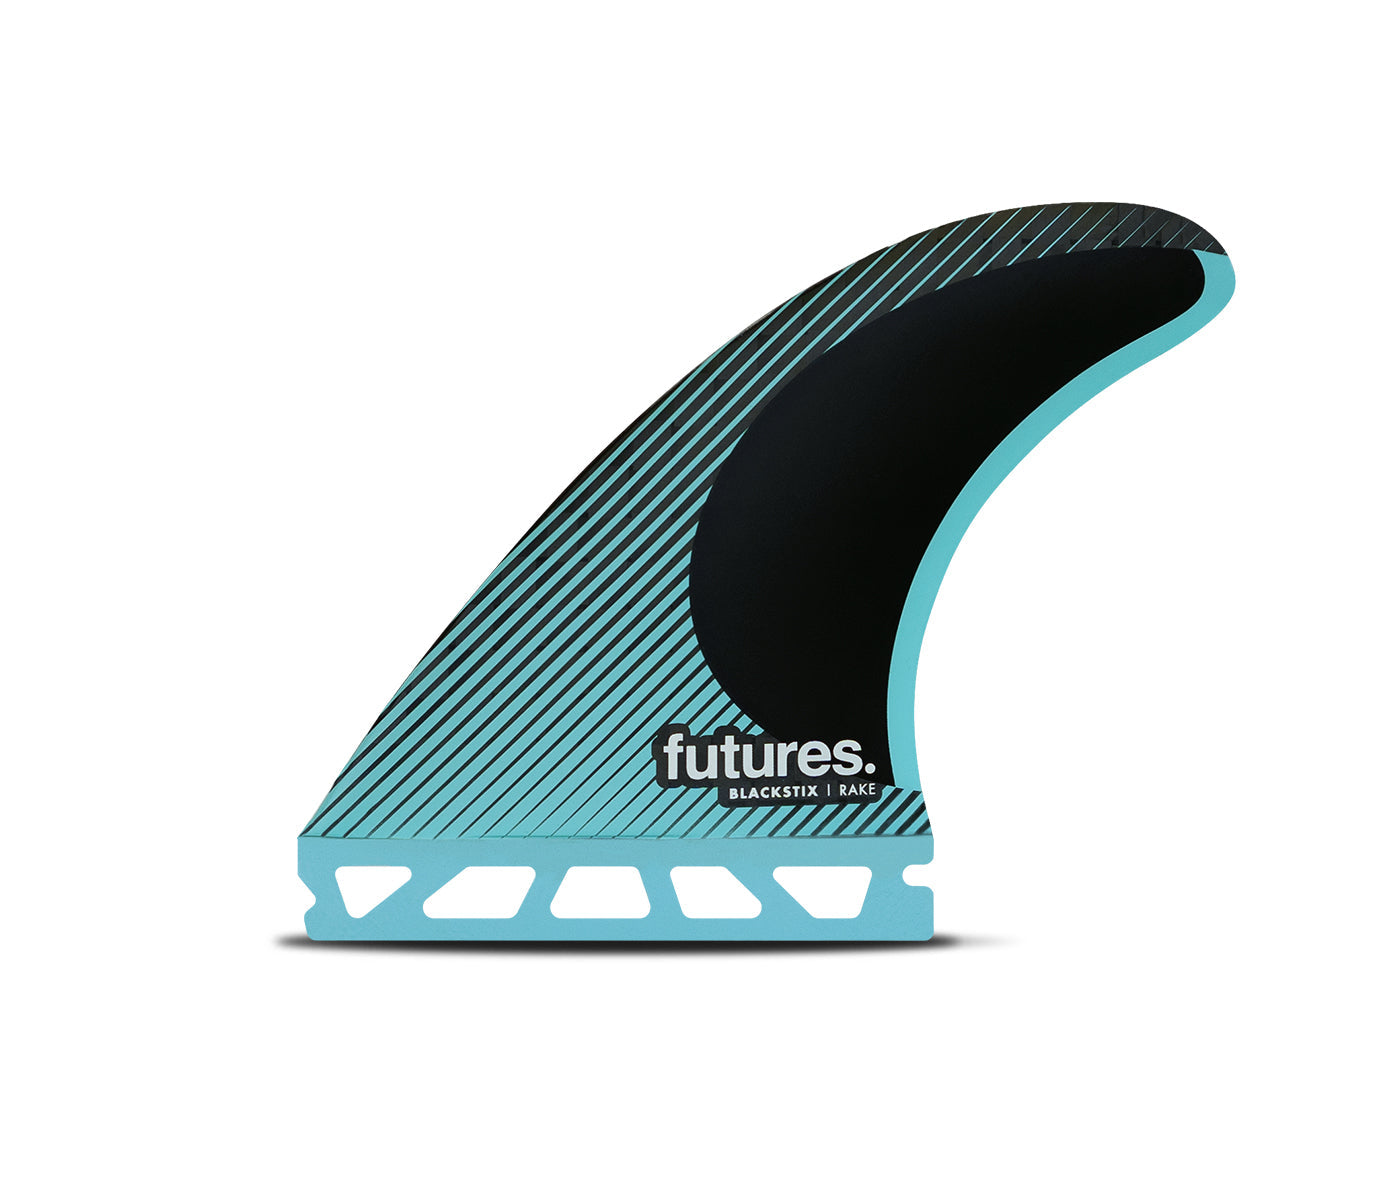 Futures R4 BLACKSTIX RAKE - Board Store FuturesFins  